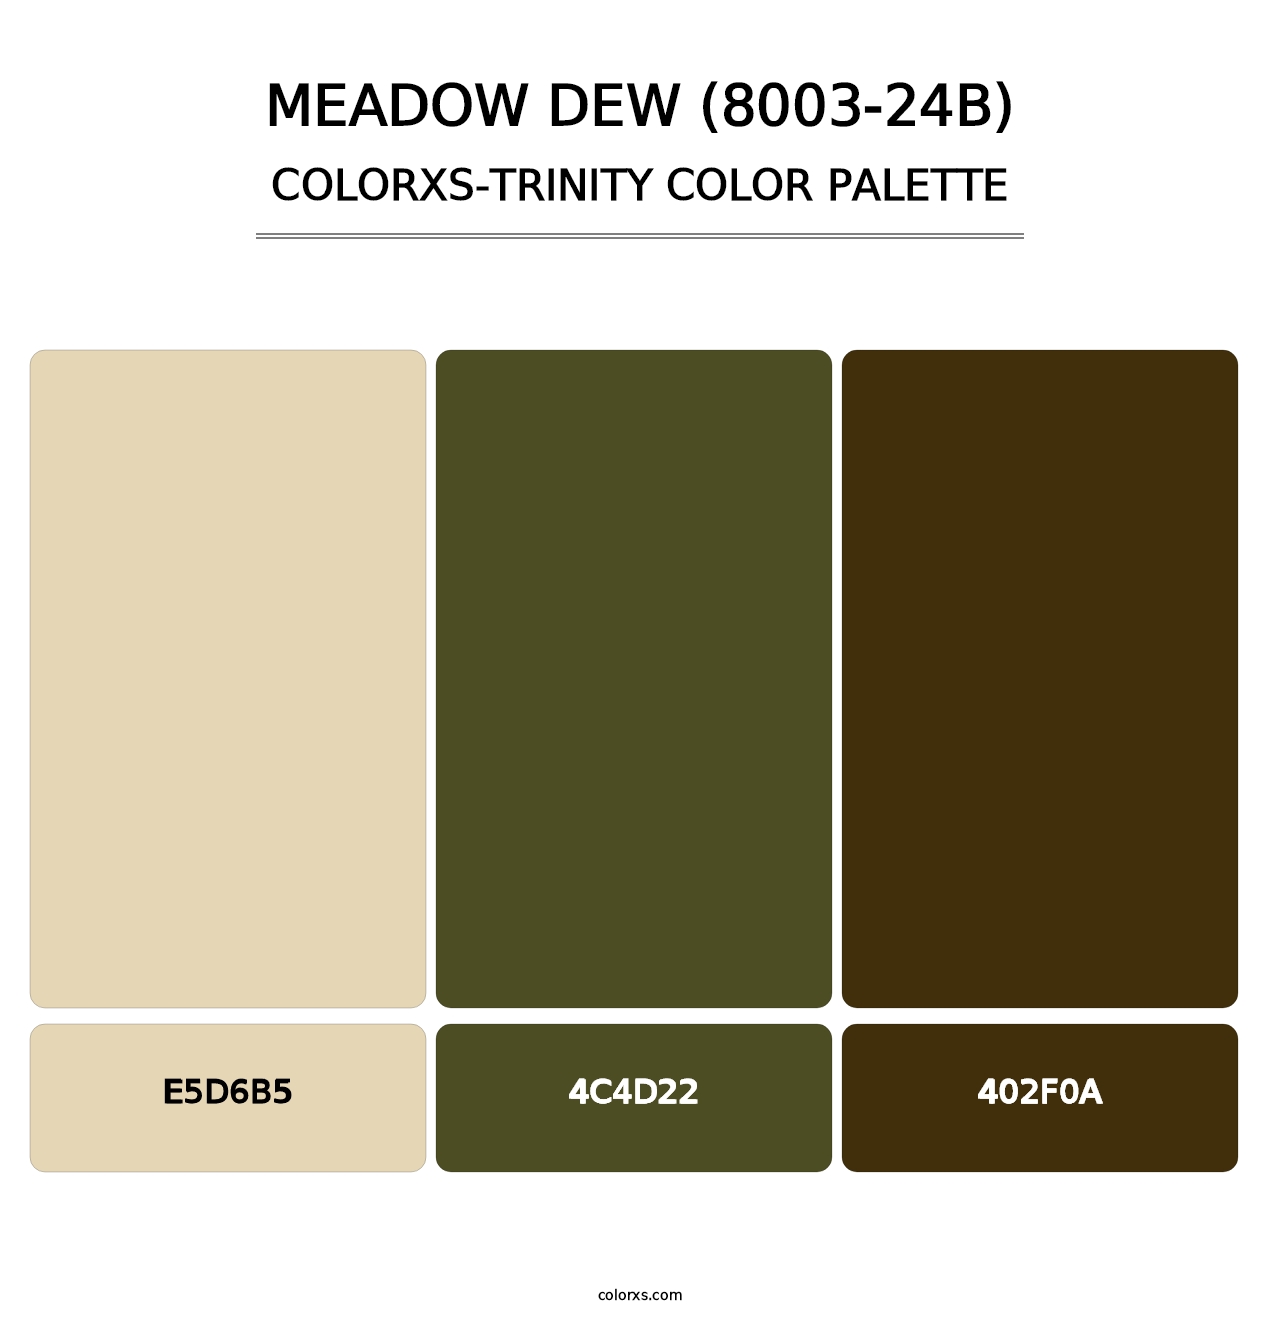 Meadow Dew (8003-24B) - Colorxs Trinity Palette